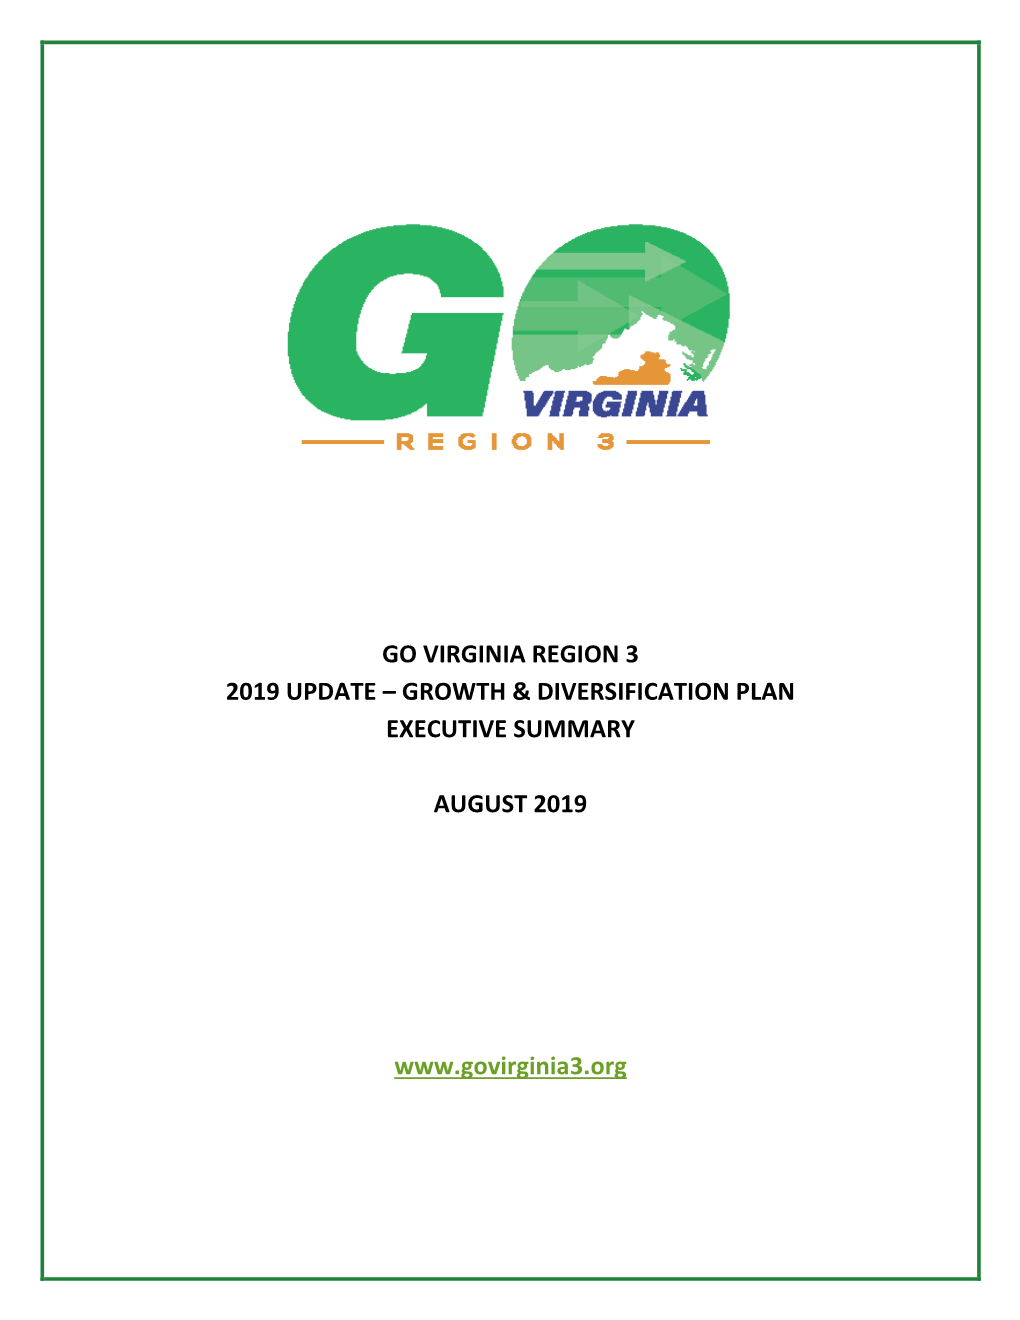 Go Virginia Region 3 2019 Update – Growth & Diversification Plan Executive Summary